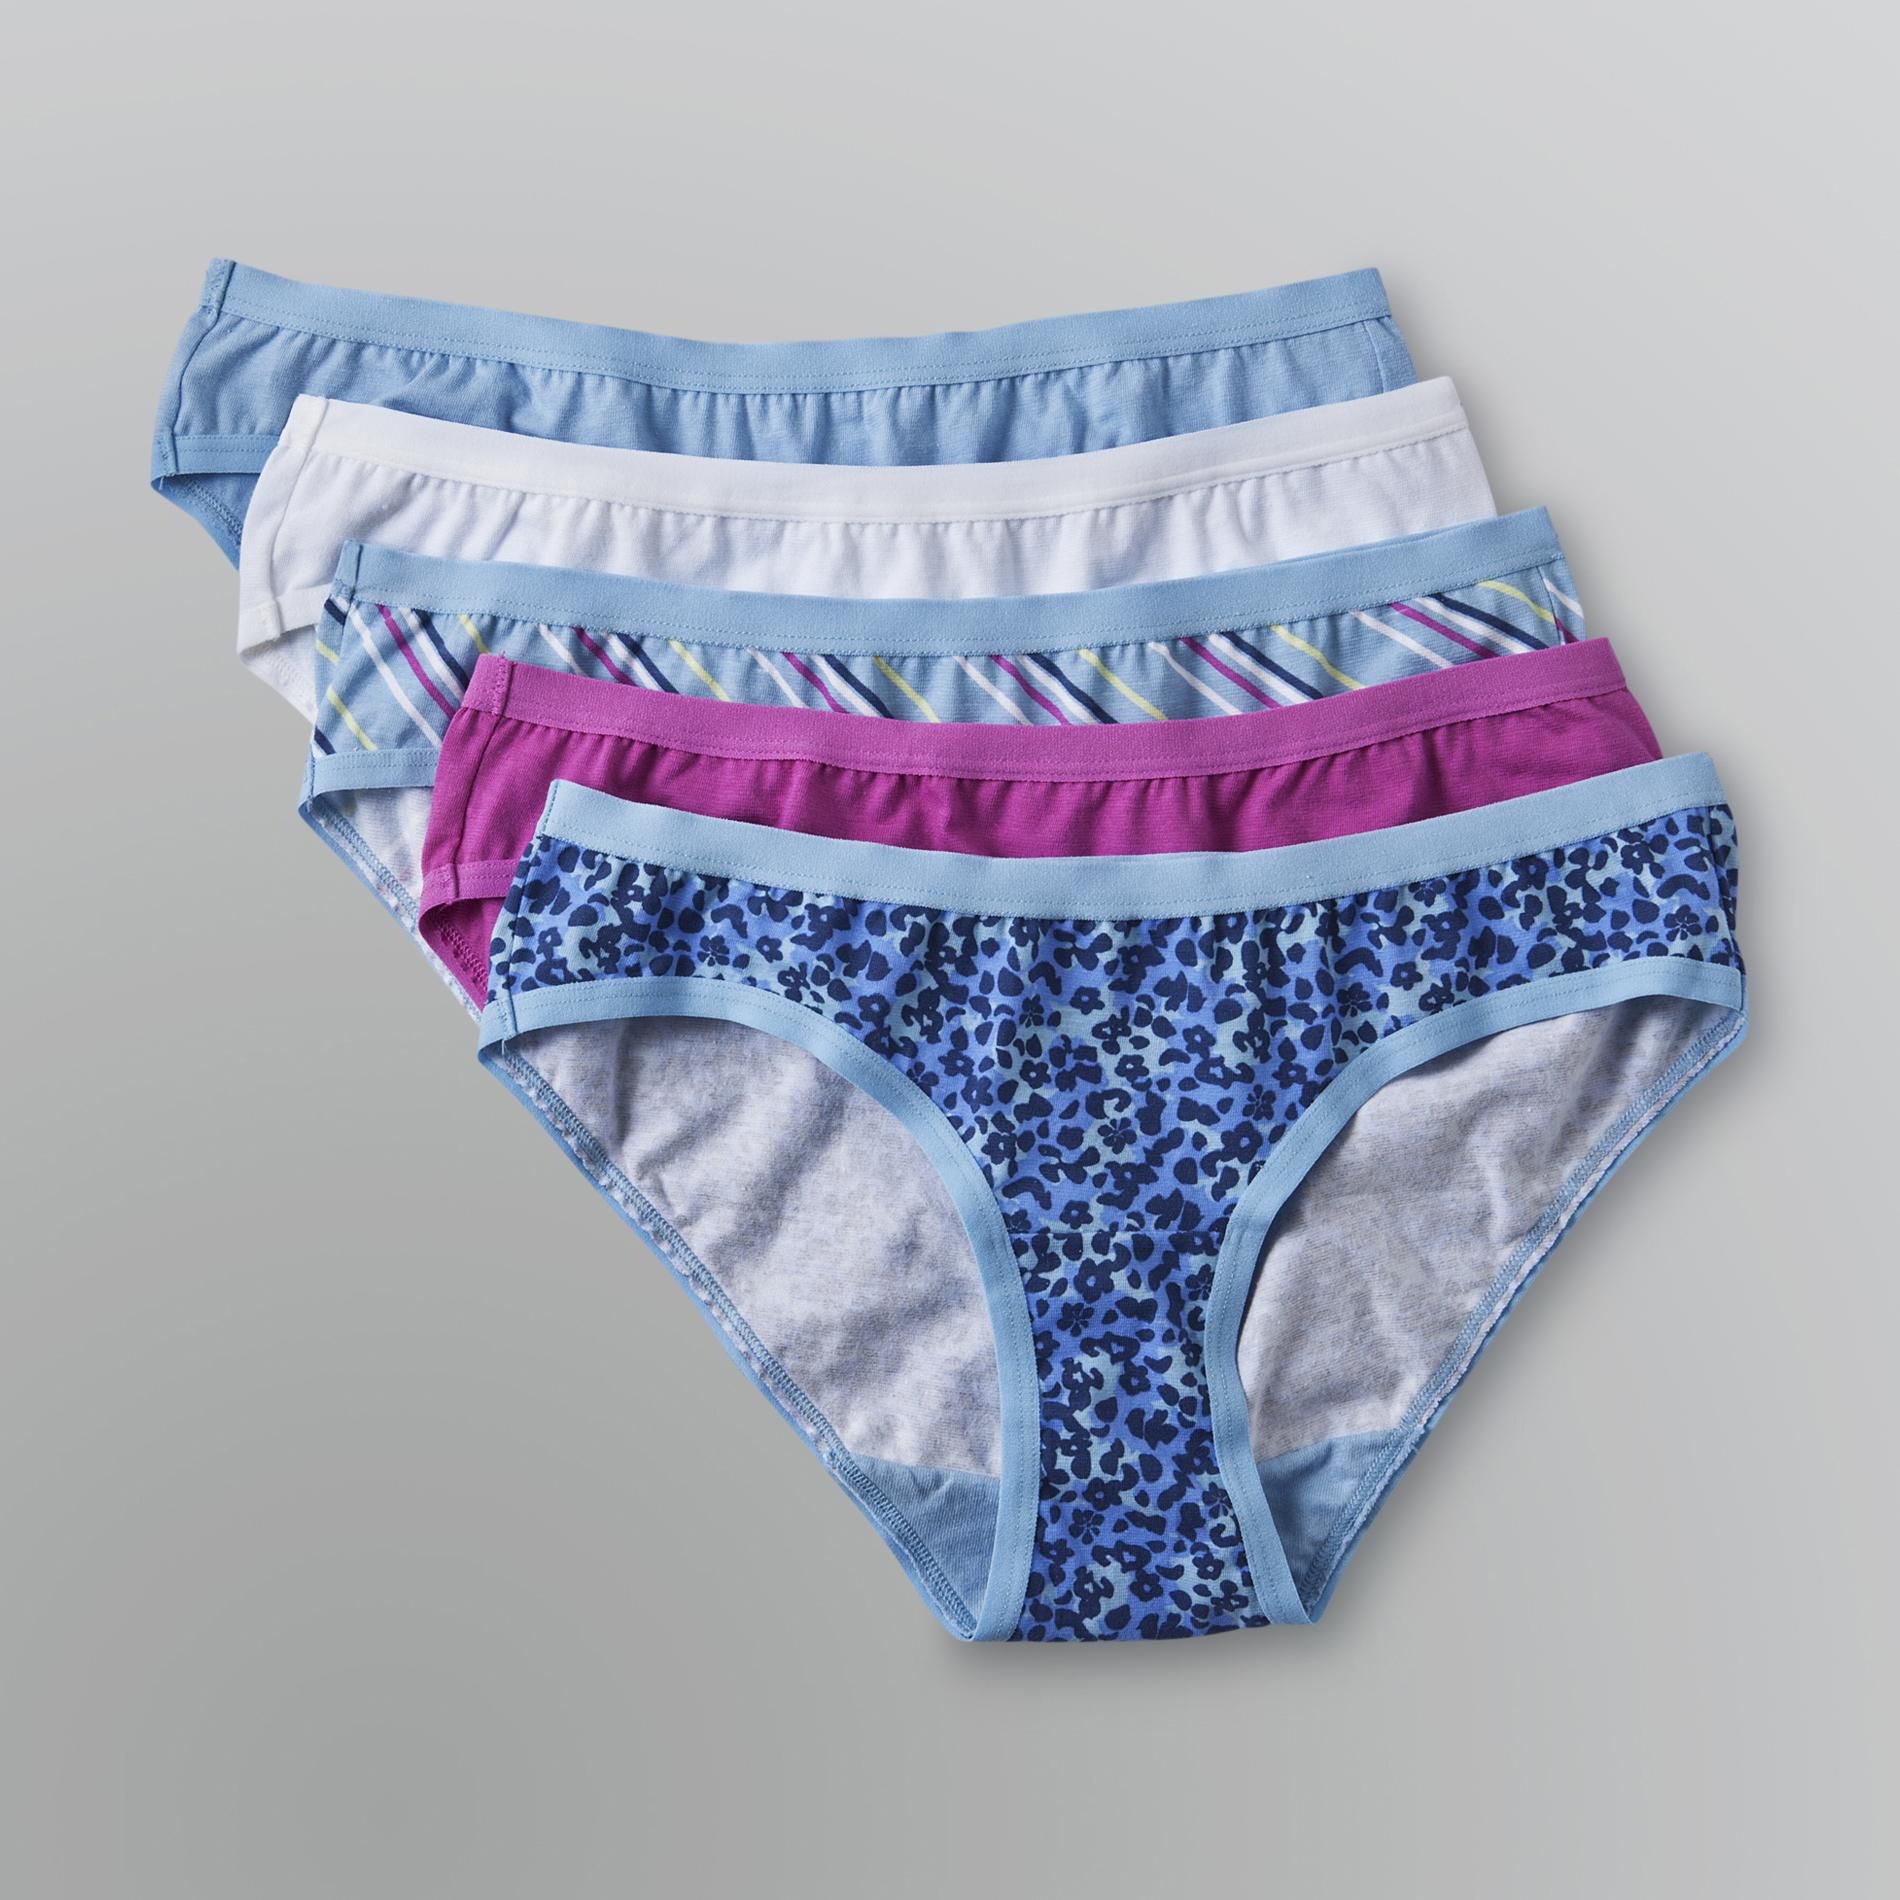 Vanity Fair Women's True Comfort Cotton Hipster Panty - 5-Pack